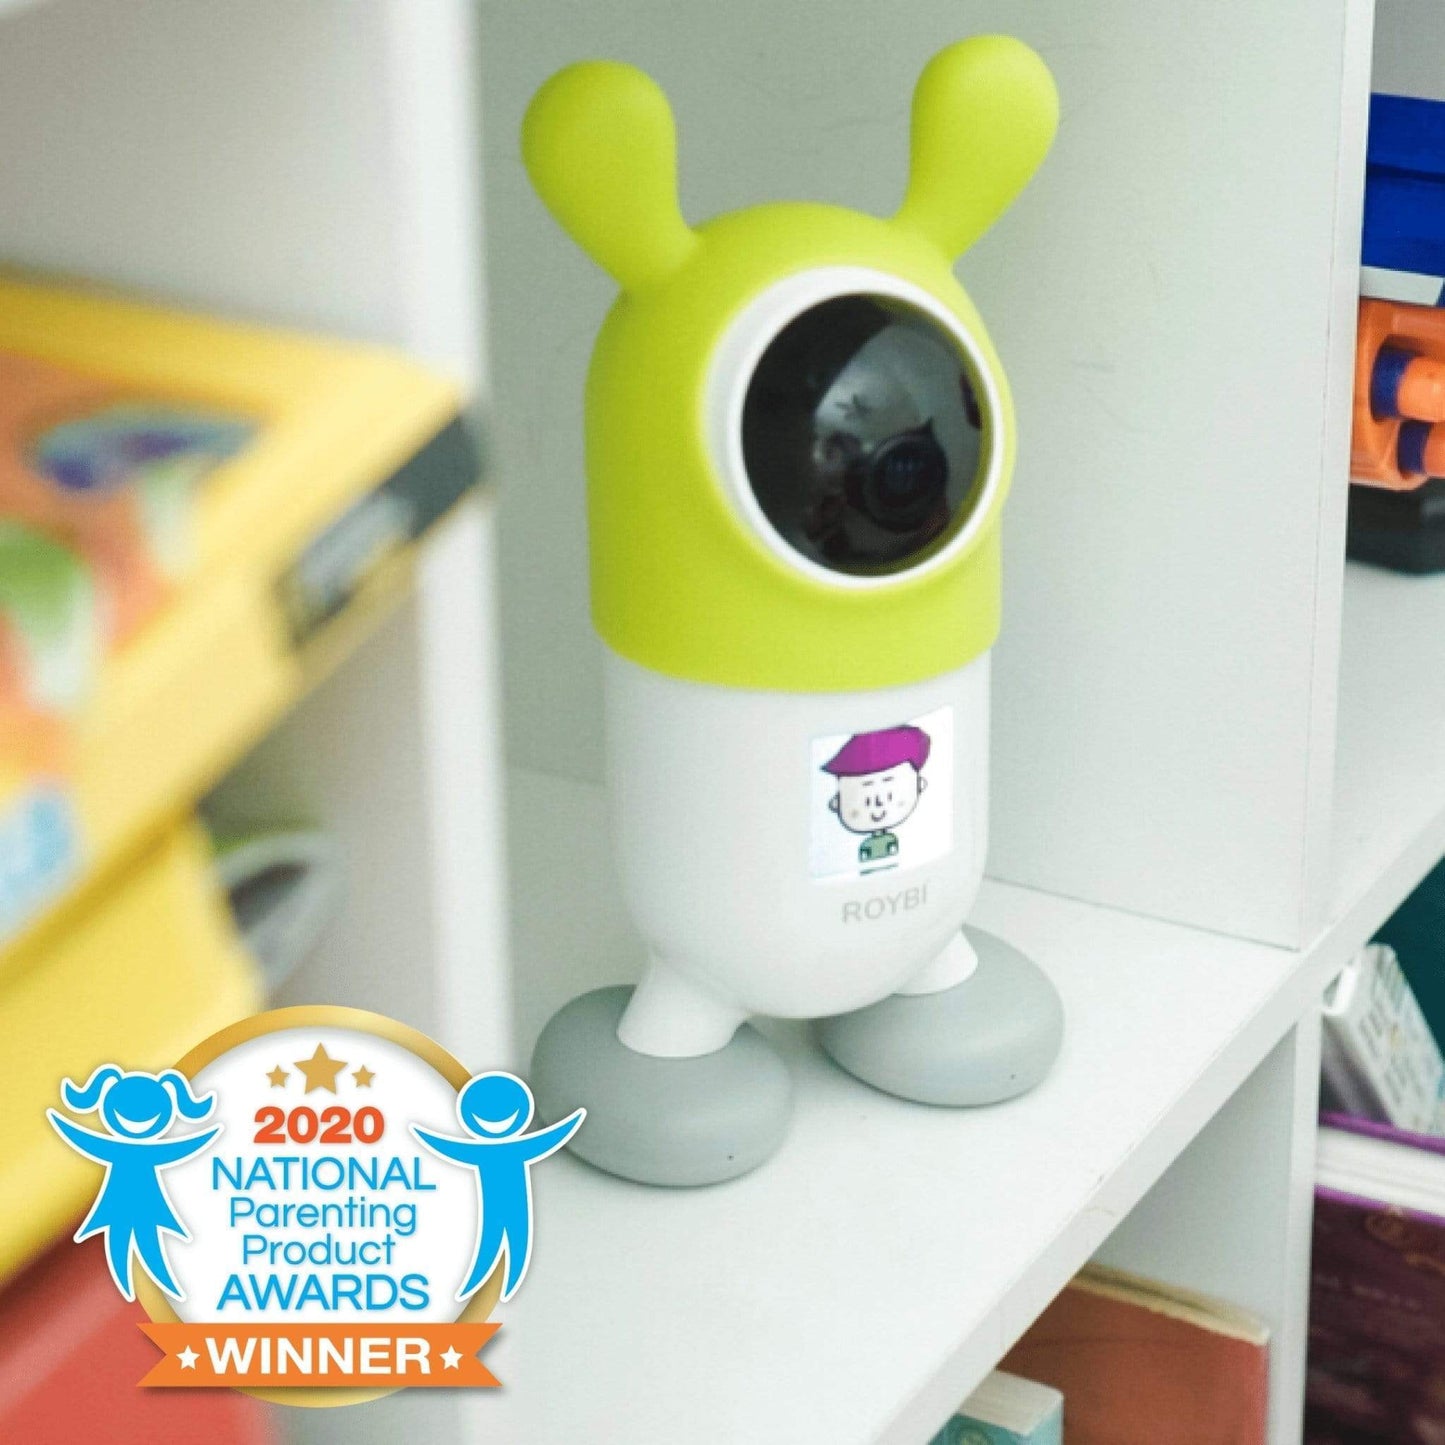 Roybi Robot Smart Educational Toy For Kids Creative Stem Learning - A Horizon Dawn